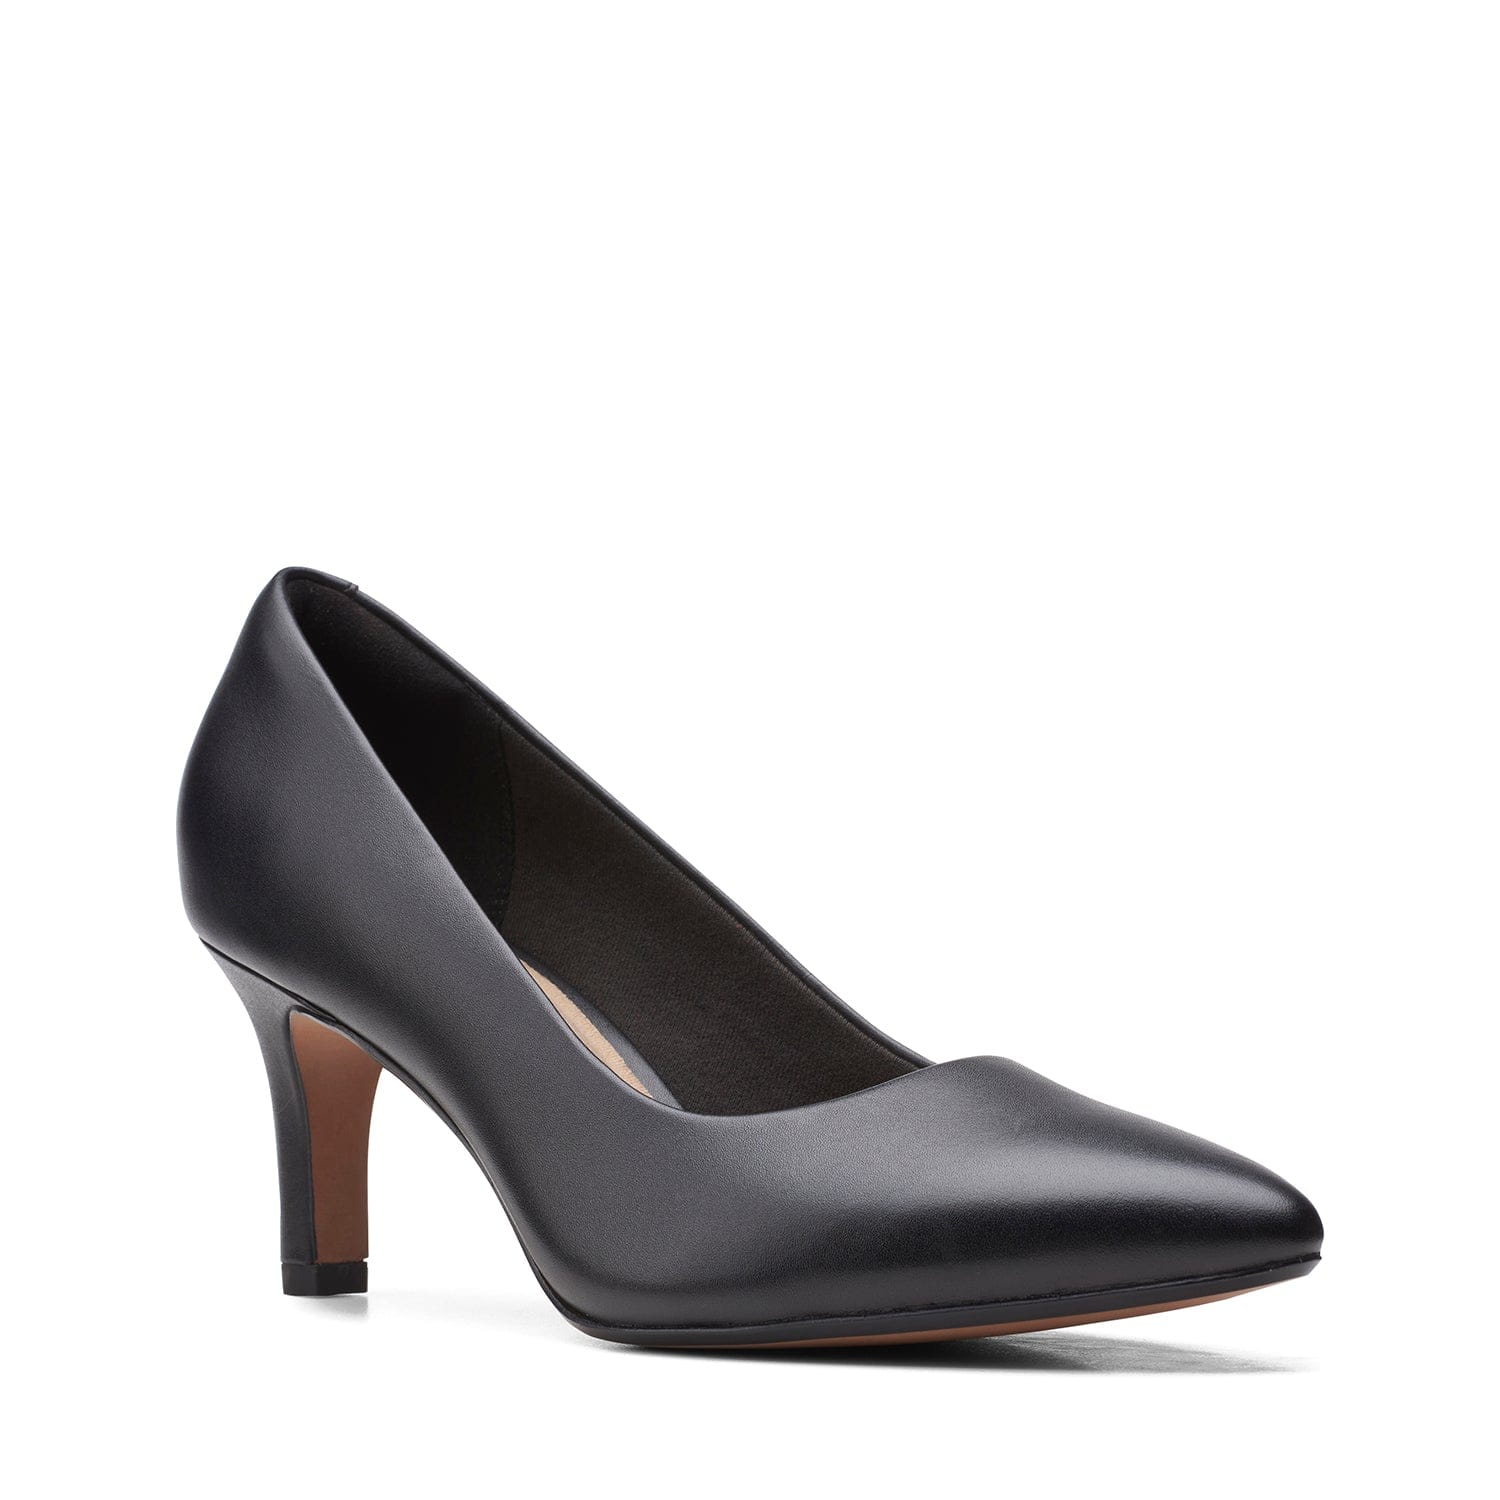 Clarks Illeana Tulip Shoes - Black Leather - 261532164 - D Width (Standard Fit)